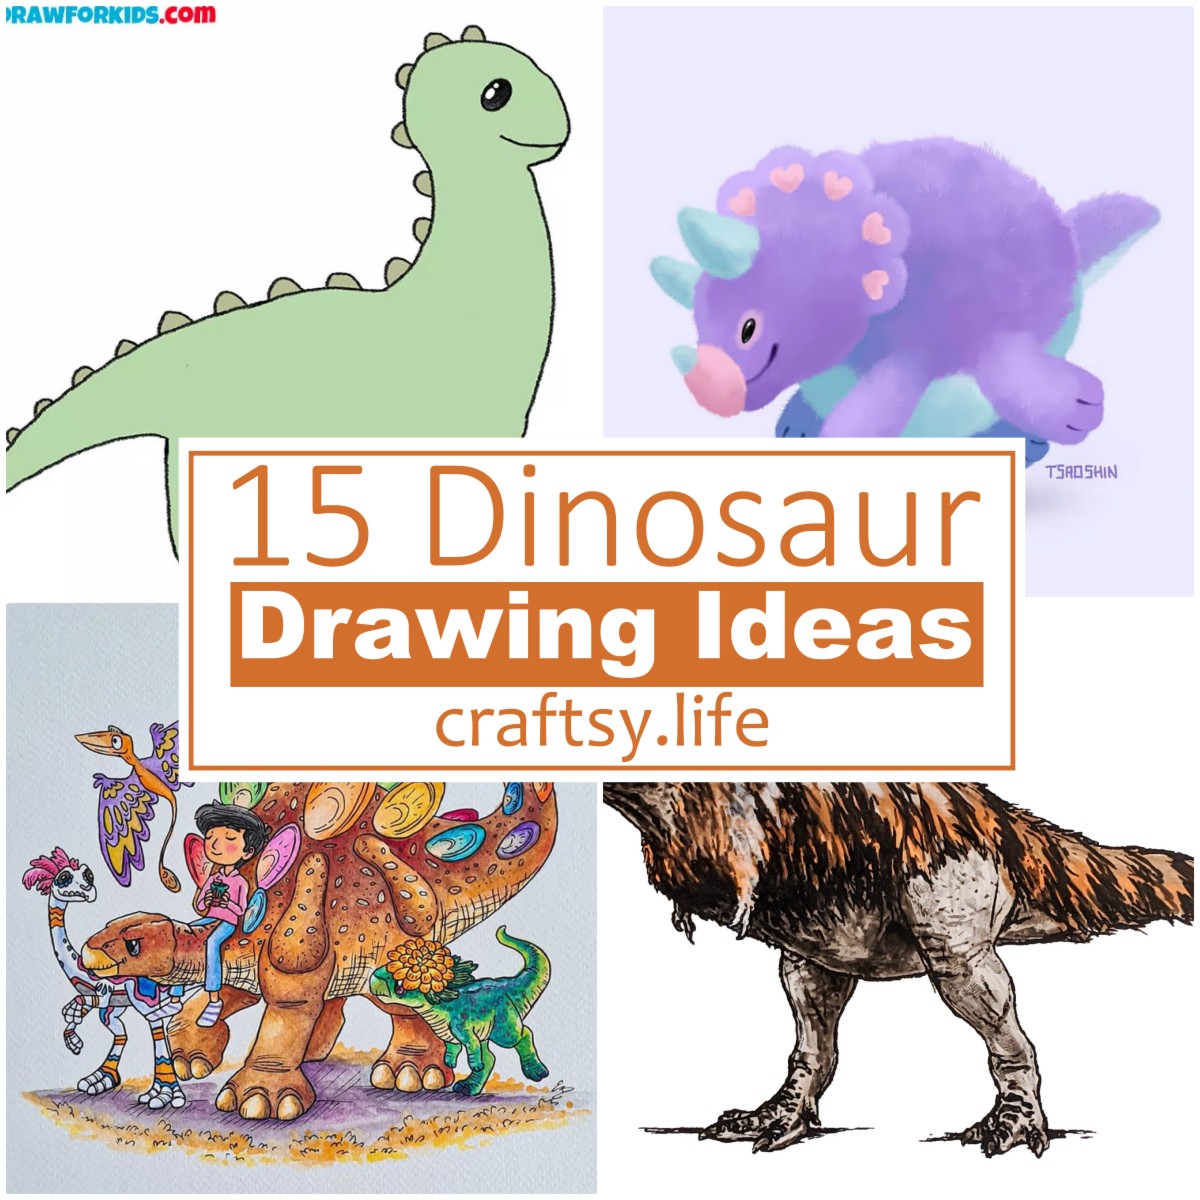 15 Dinosaur Drawing Ideas